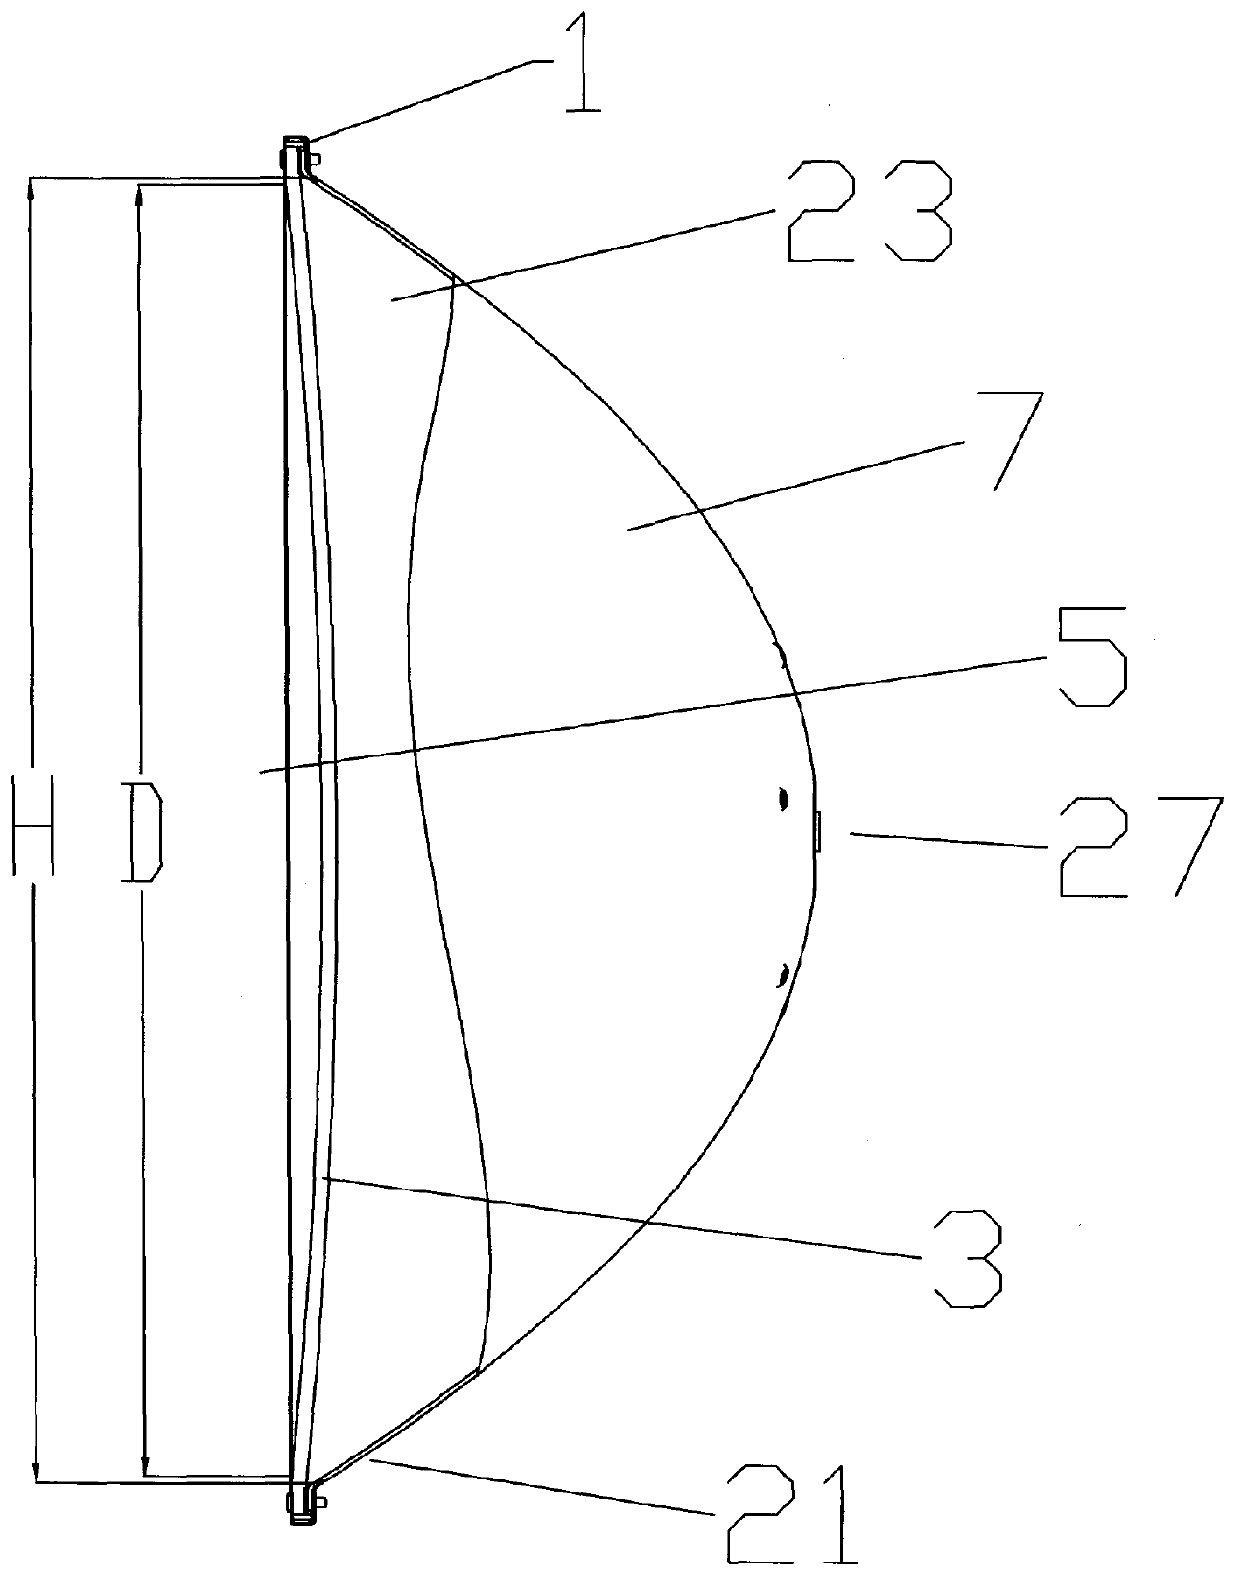 Reflector antenna radome attachment band clamp